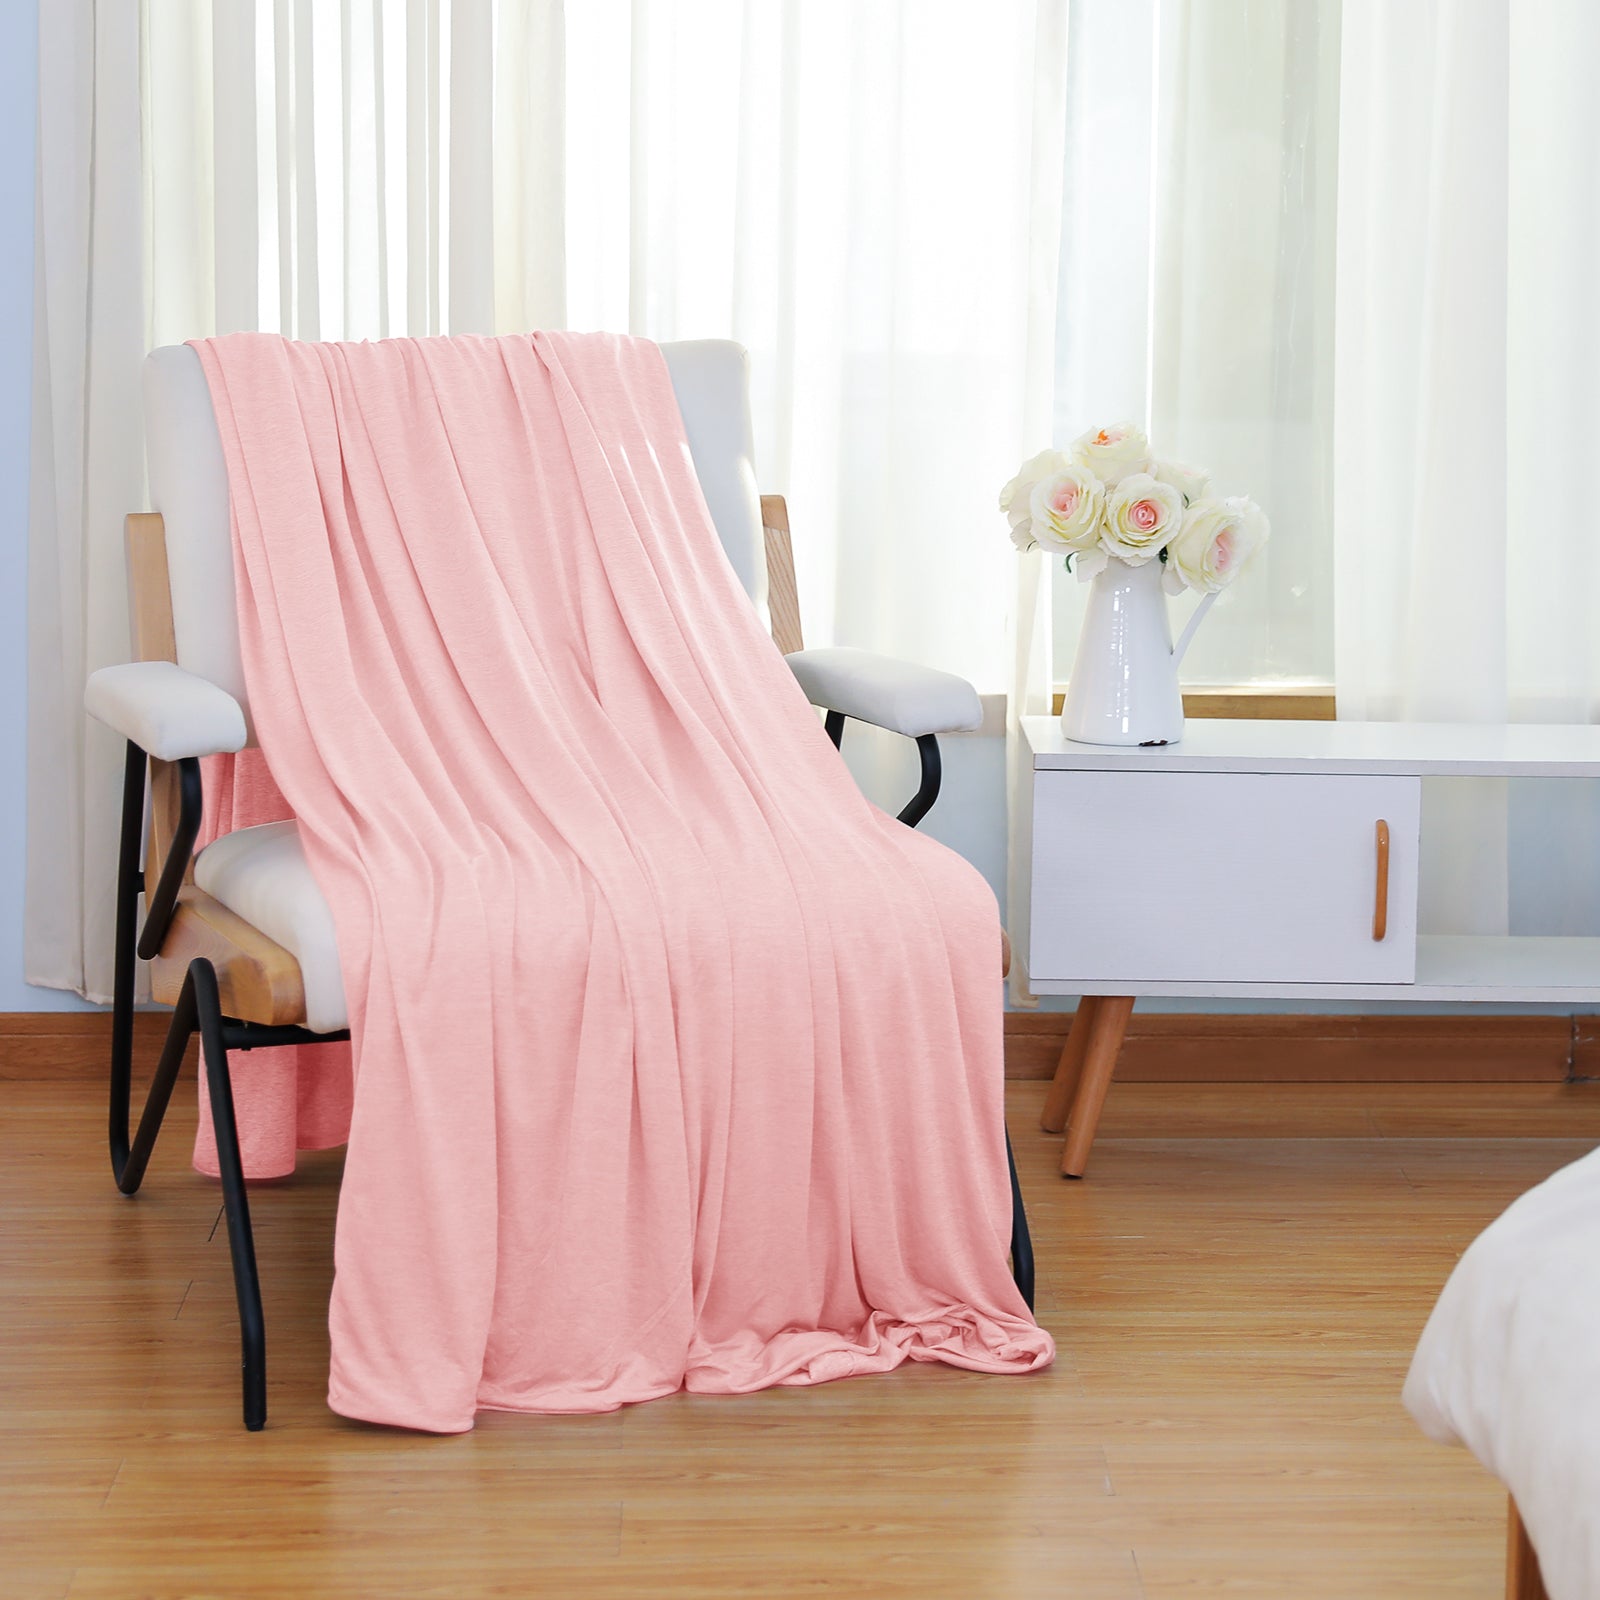 SOLEDI Cooling Blanket Cozy Blanket (Pink)